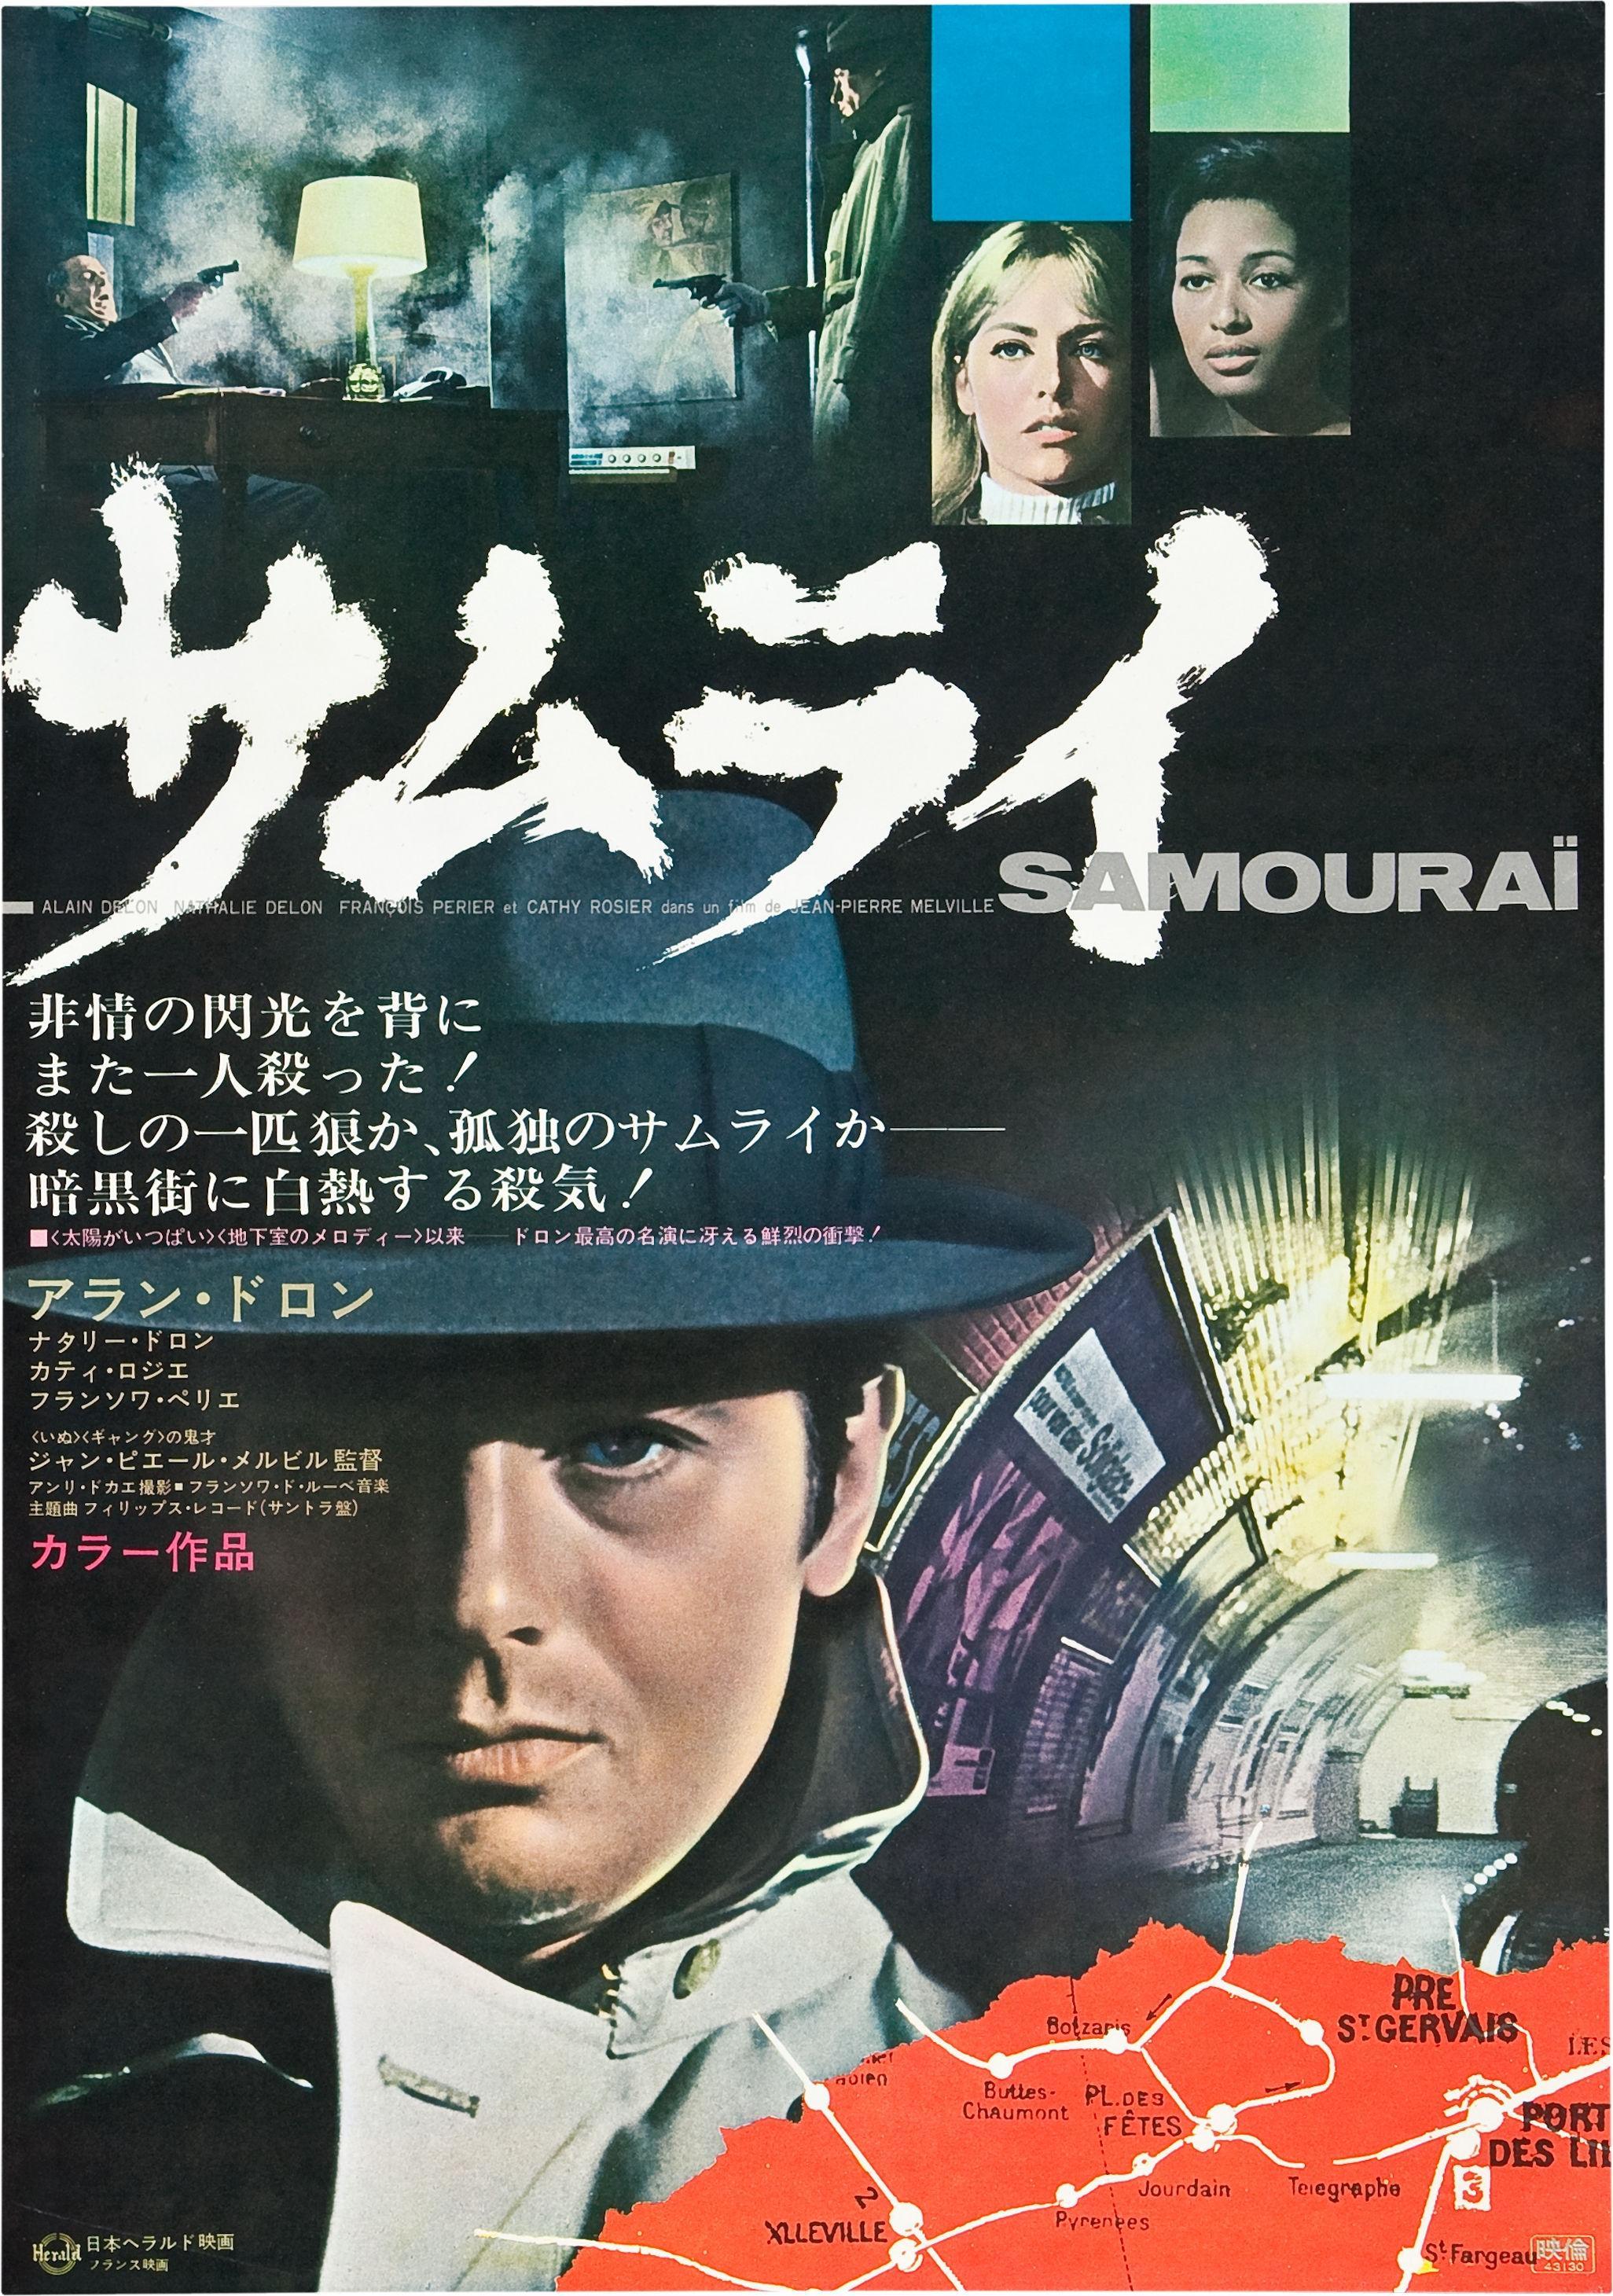 Постер фильма Самурай | Samourai, Le